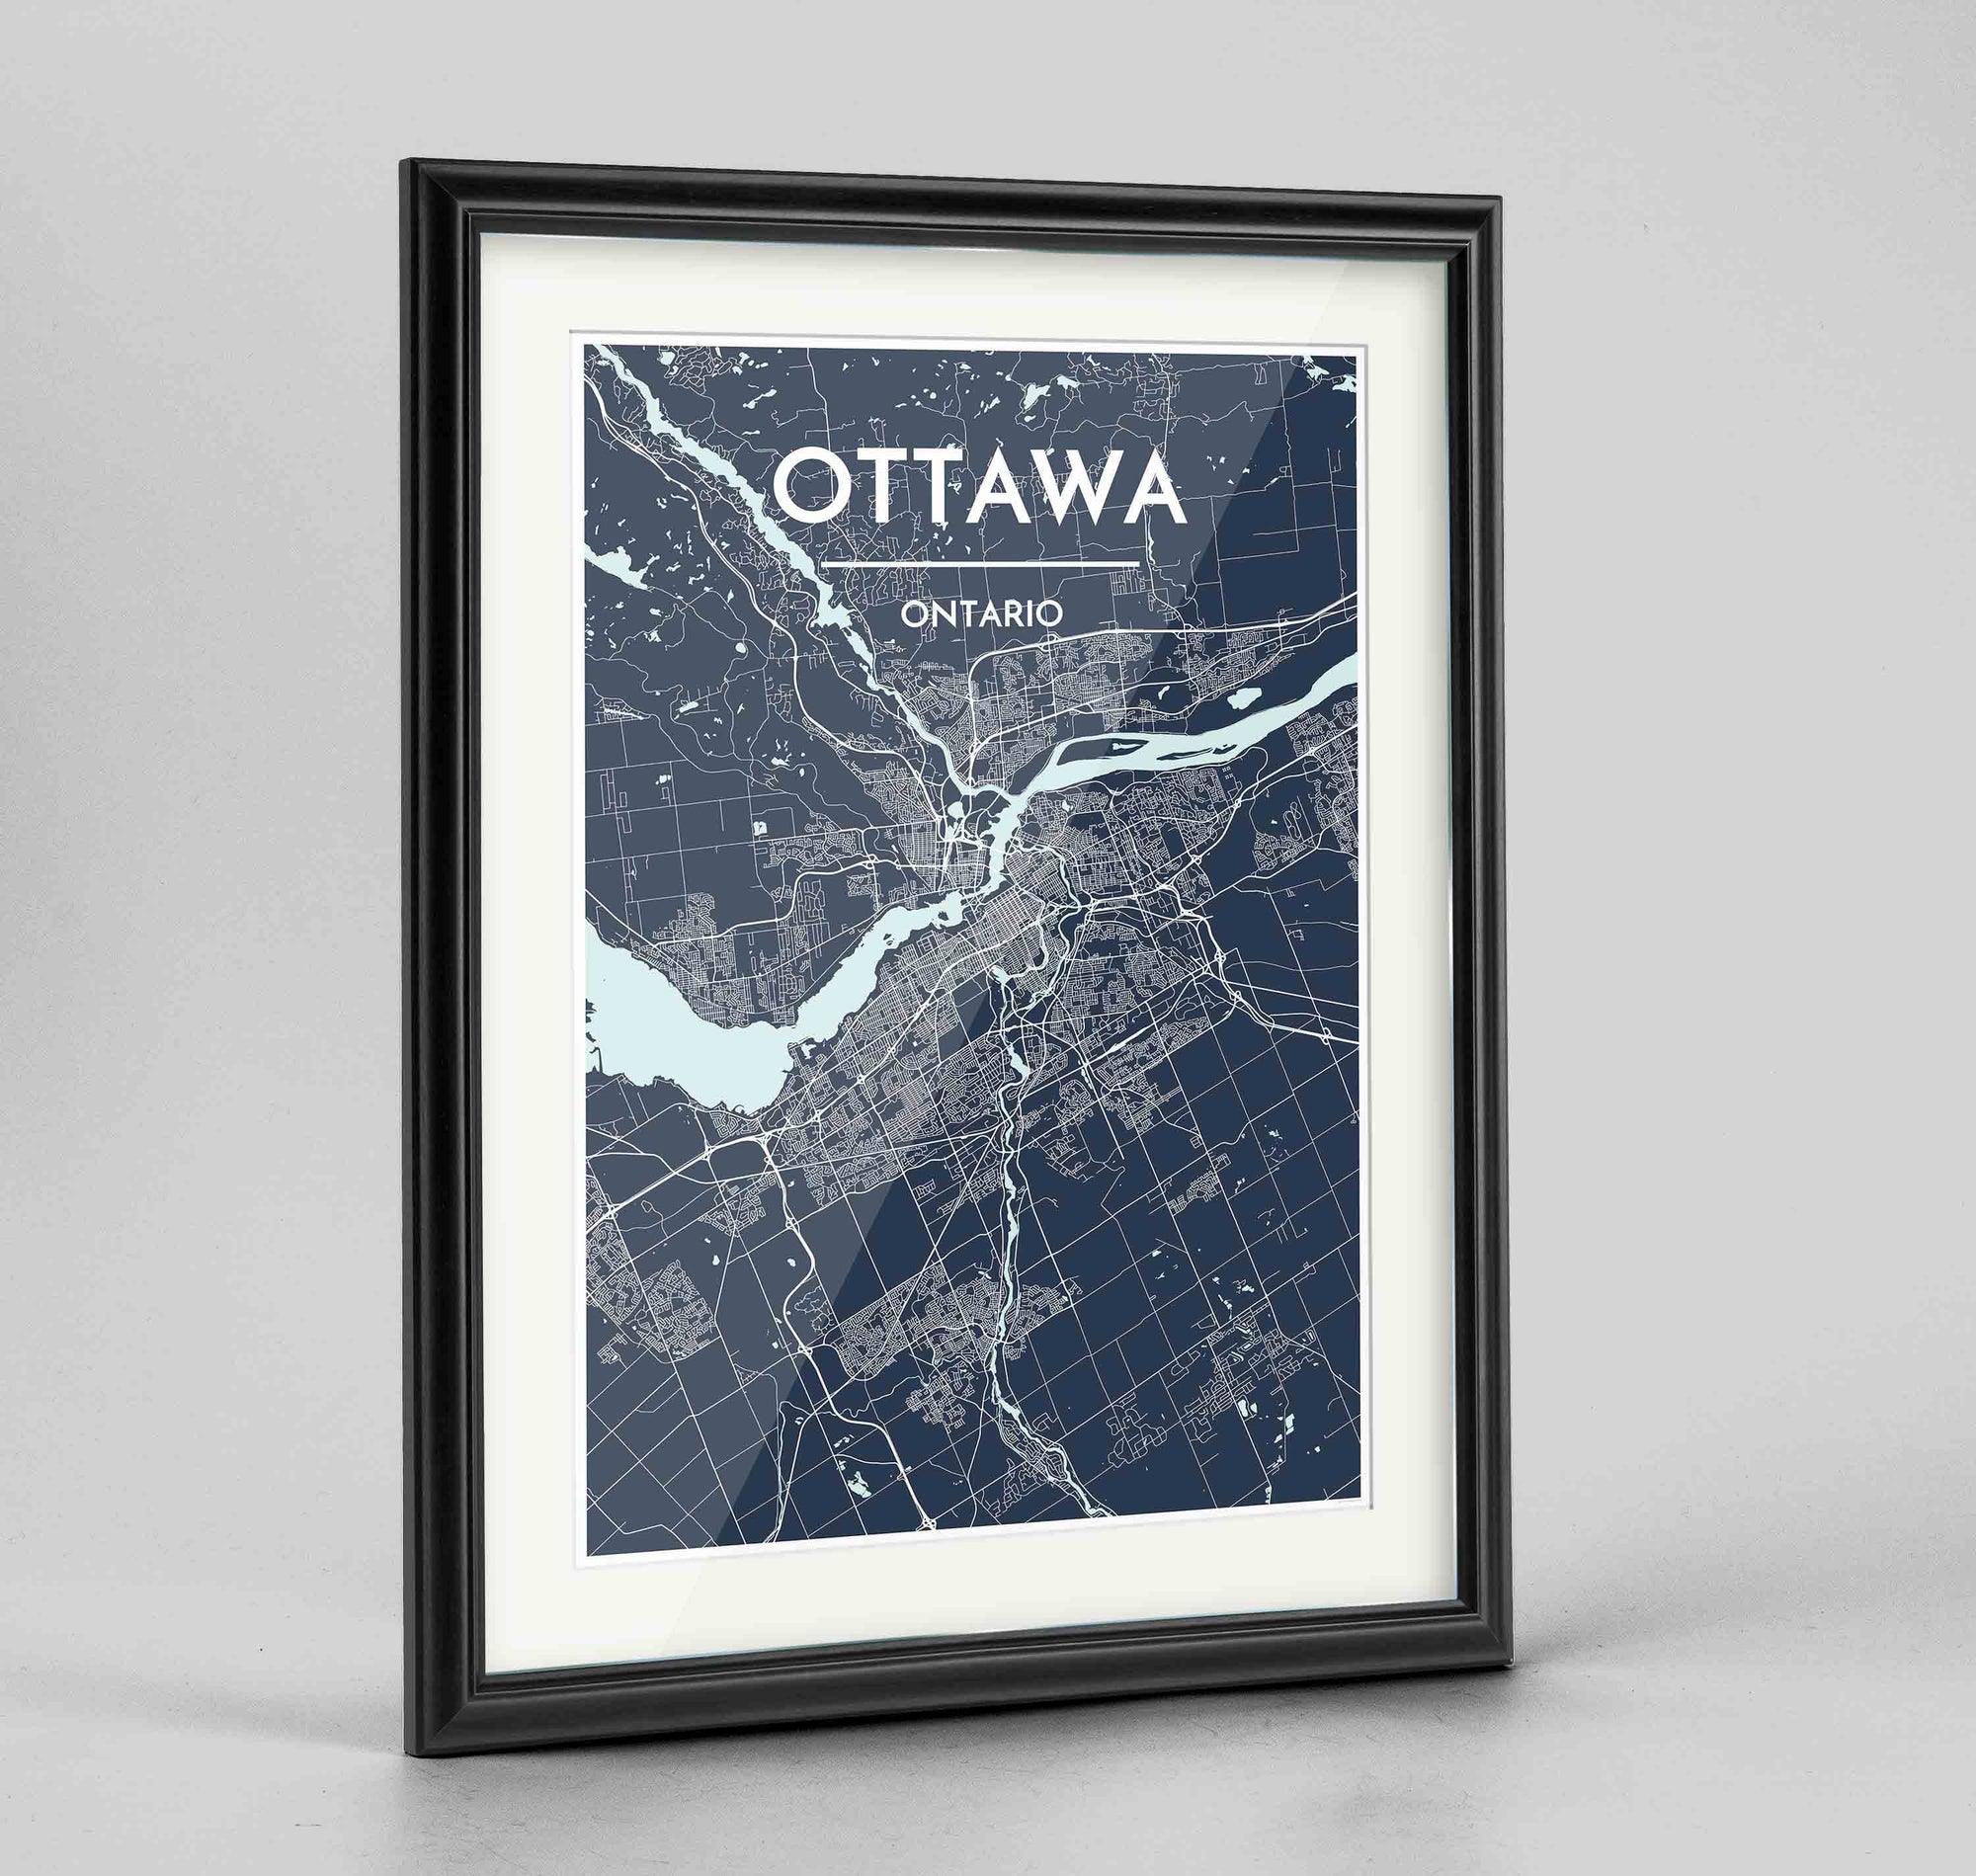 Framed Ottawa City Map 24x36" Traditional Black frame Point Two Design Group